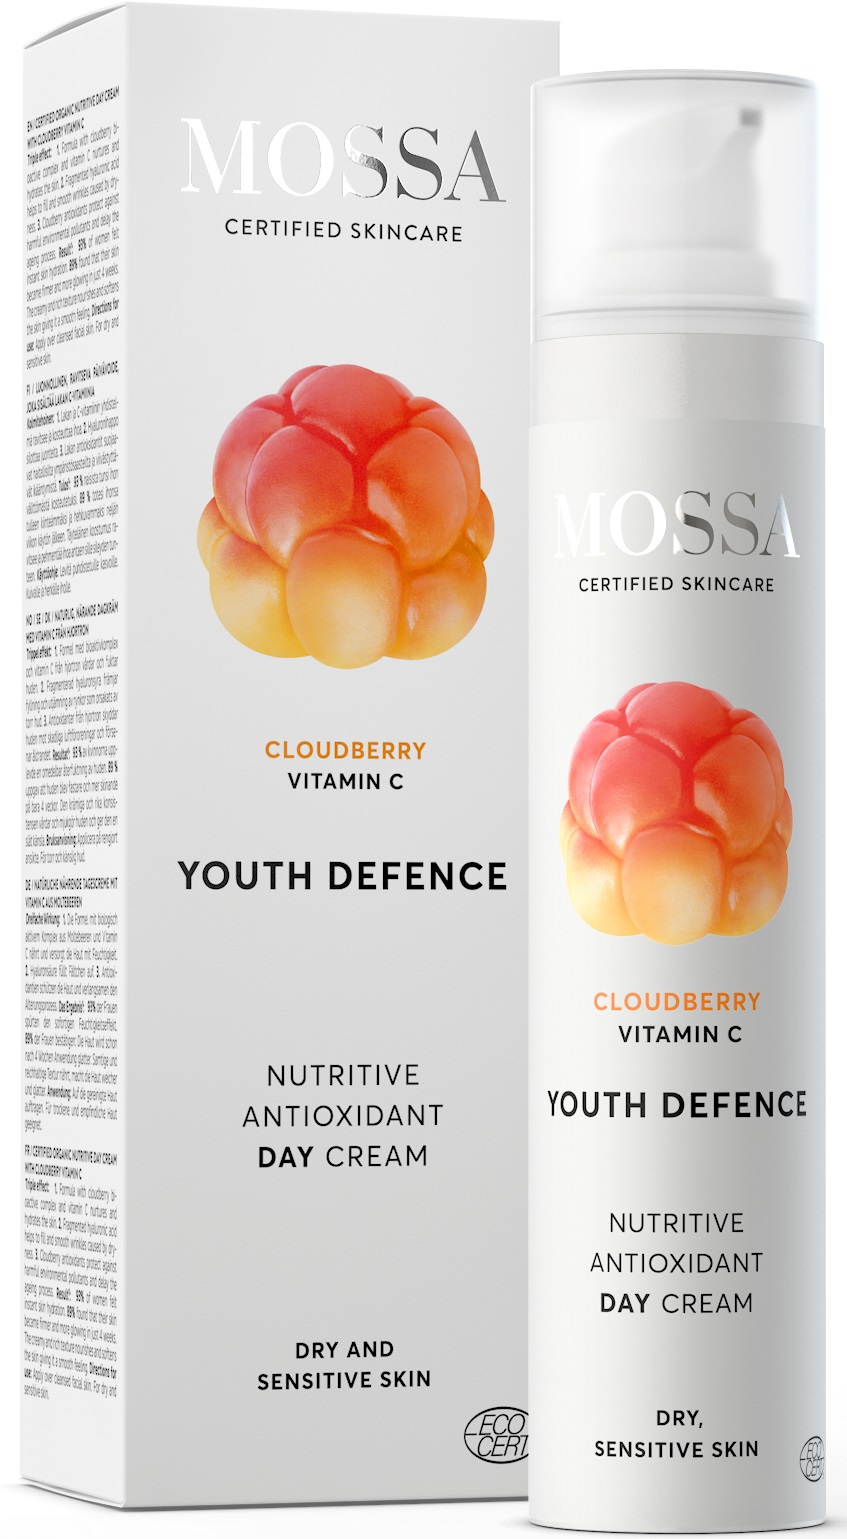 Mossa Youth Defence Nutritive Antioxidant Day Cream